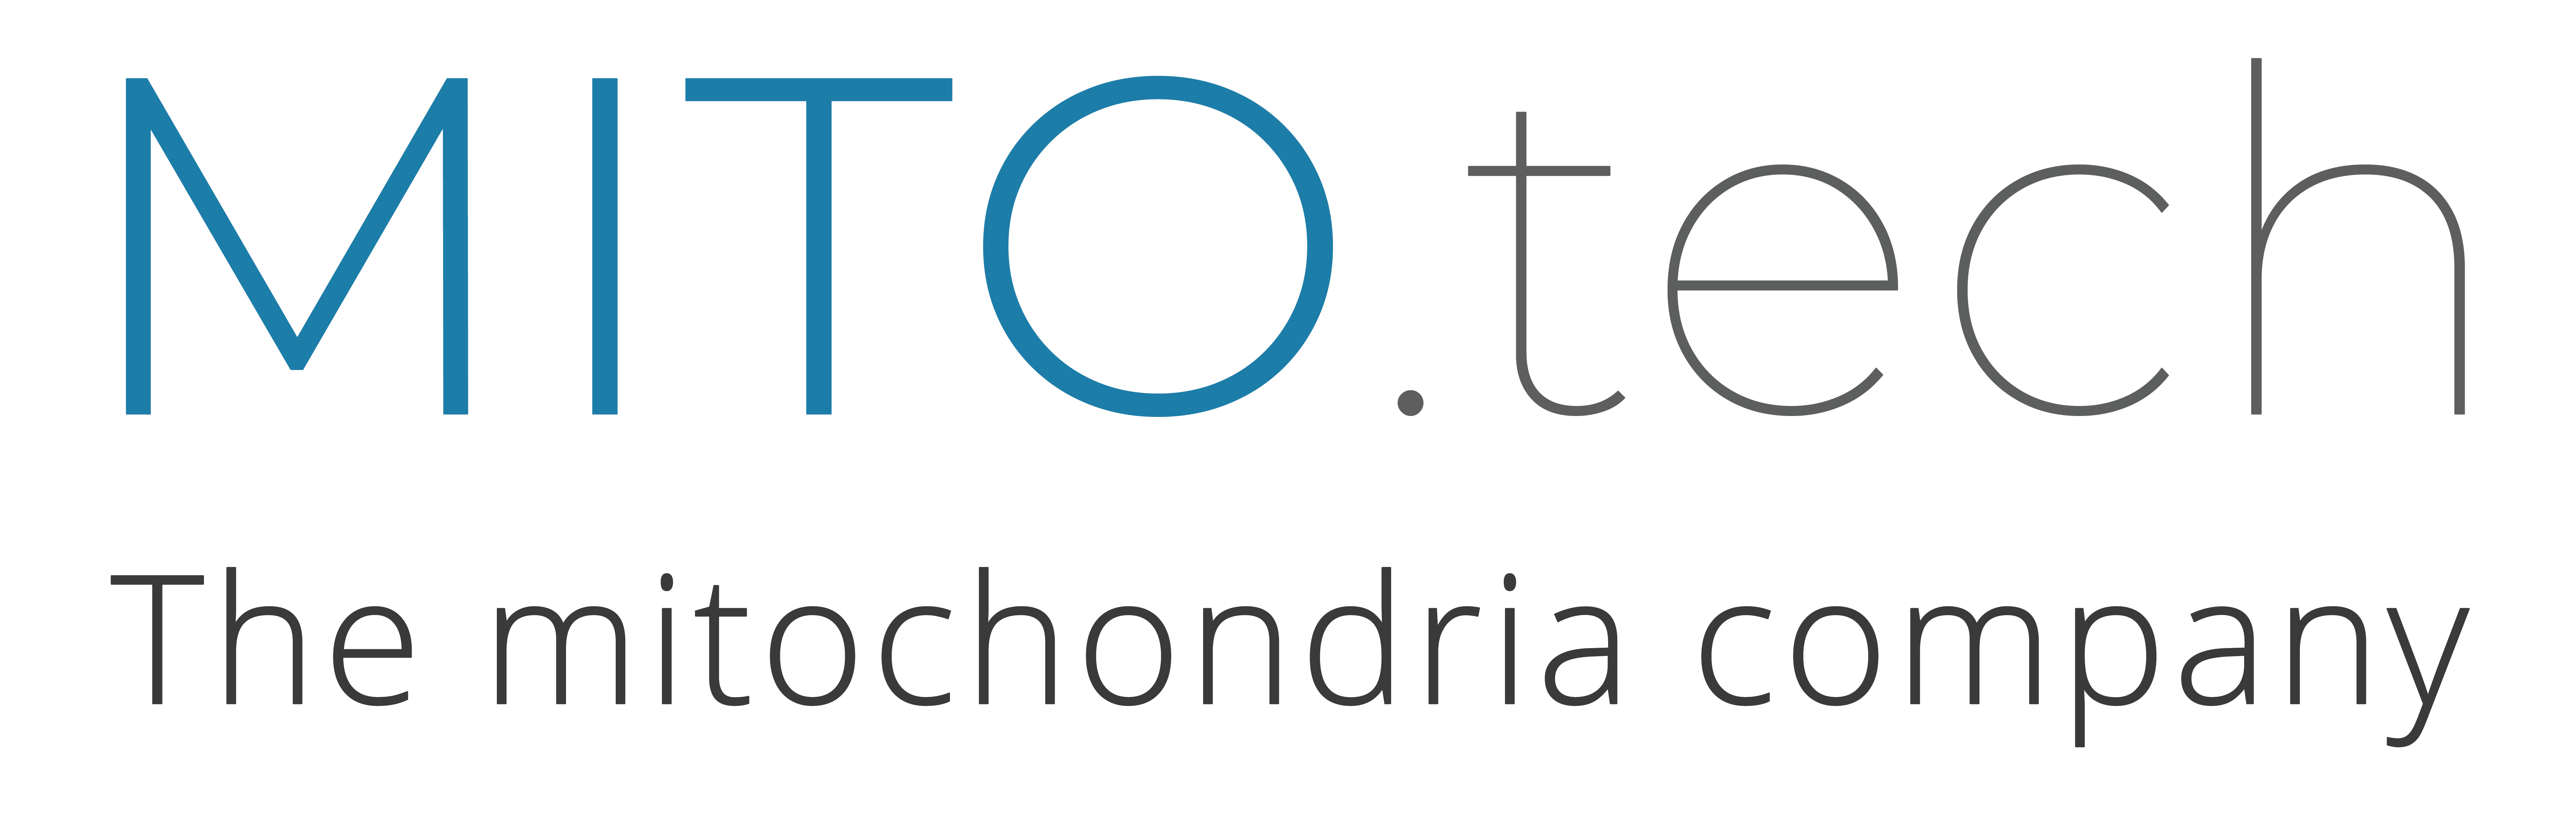 Mitotech logo